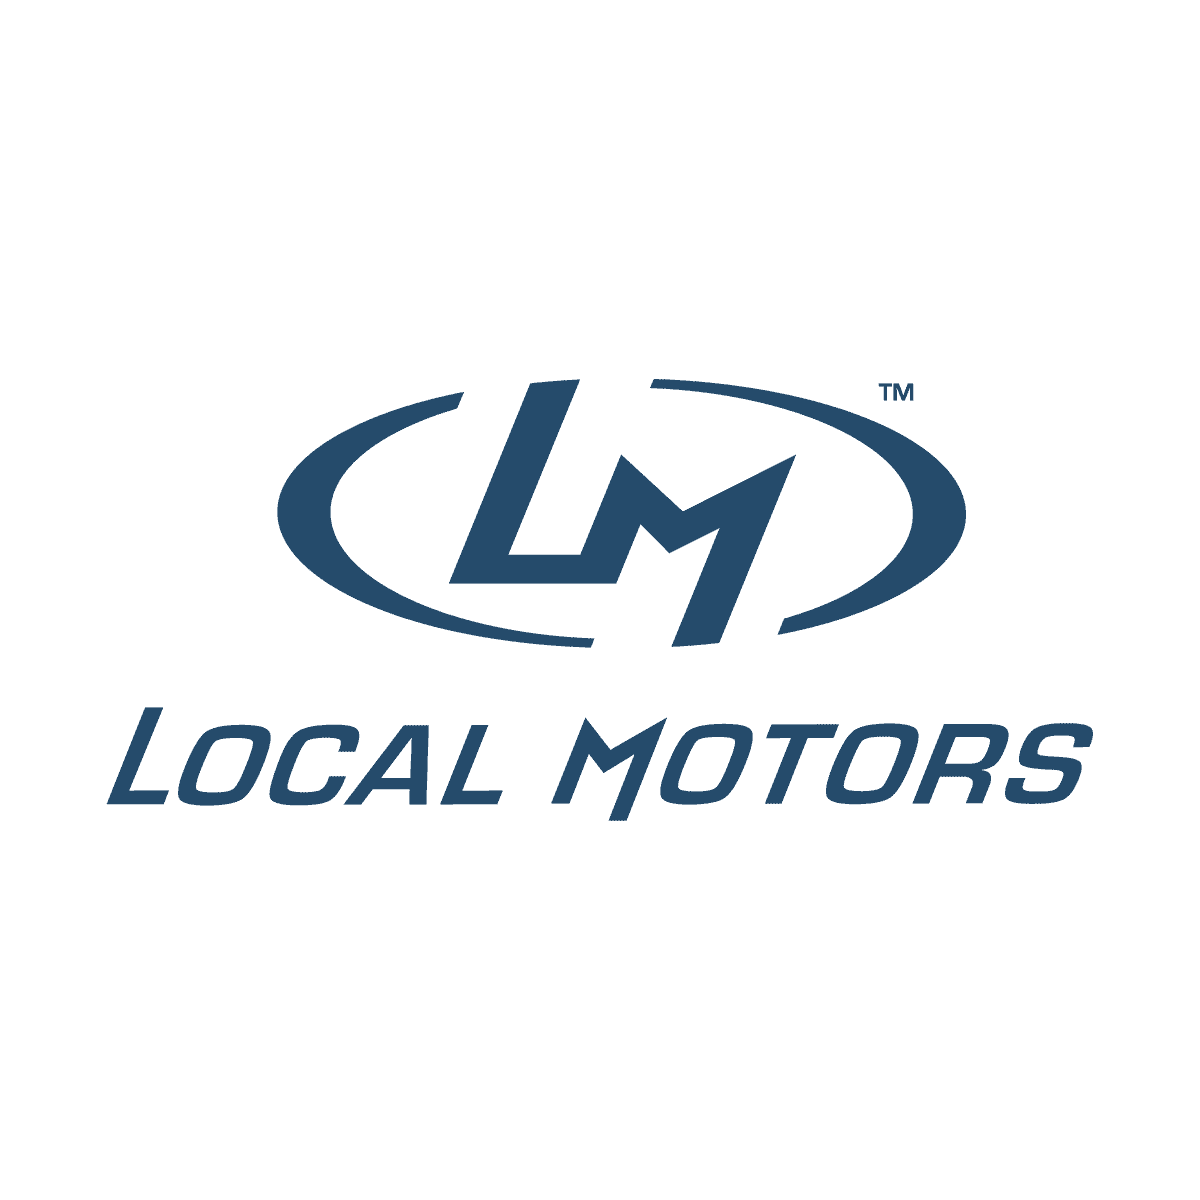 LOCAL MOTORS汽车标志设计含义 